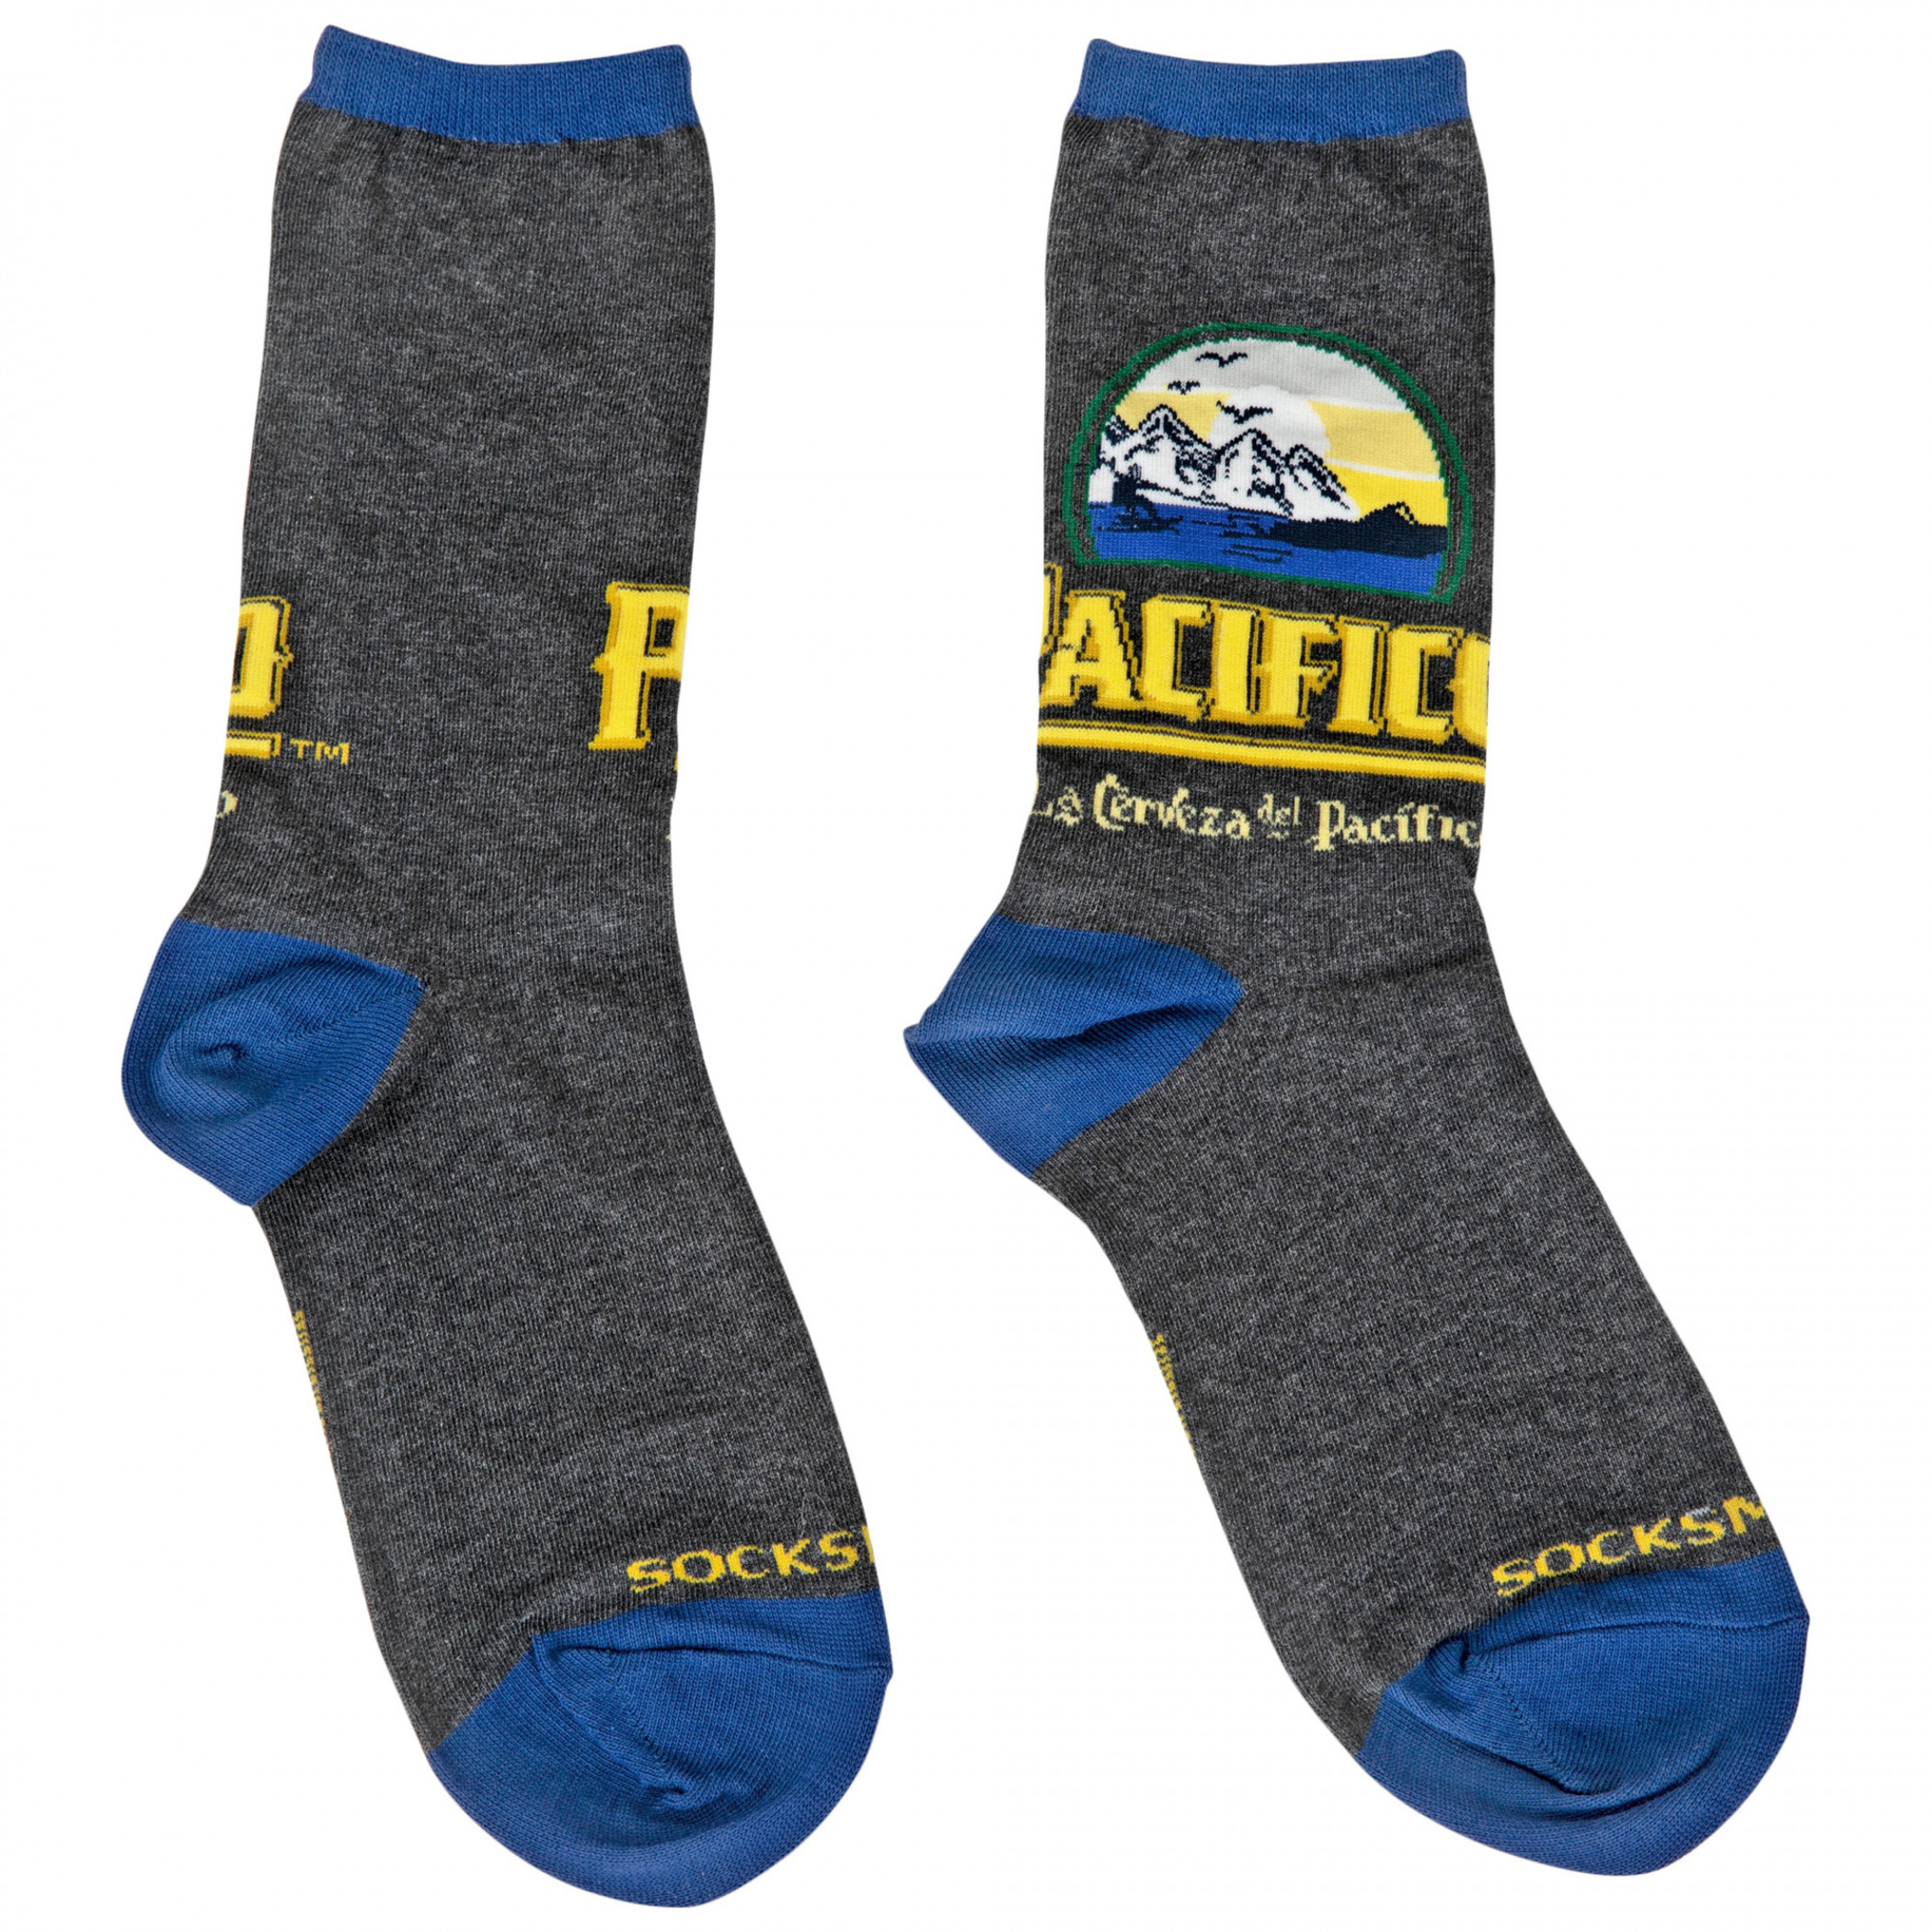 Pacifico Cerveza Seascape Women's Socks